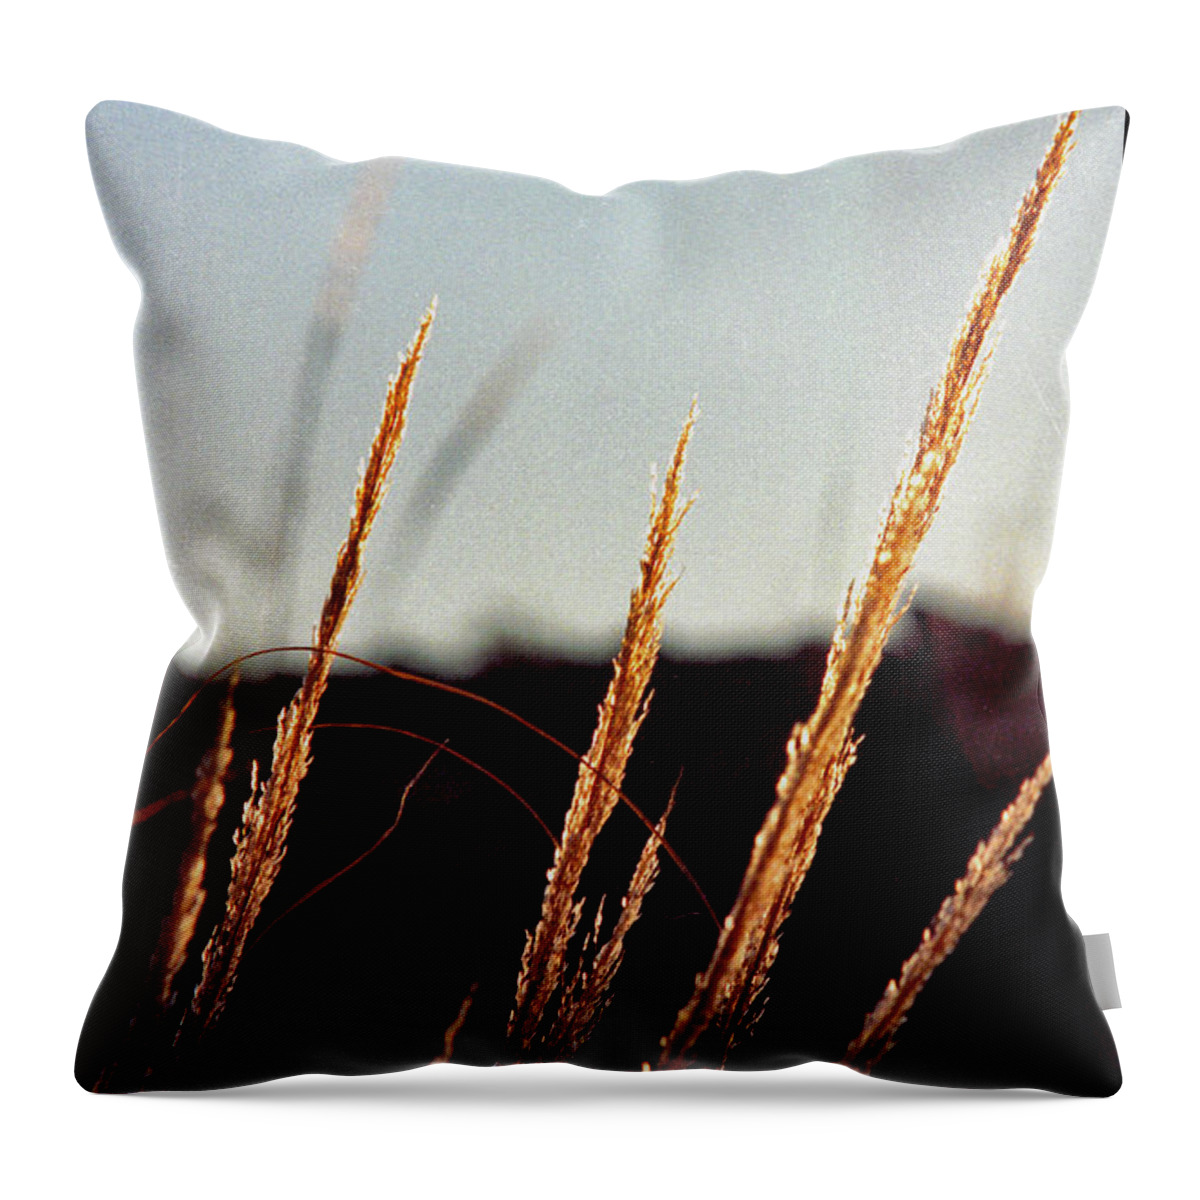 Grass Throw Pillow featuring the photograph Glistening Grass by Randy Oberg